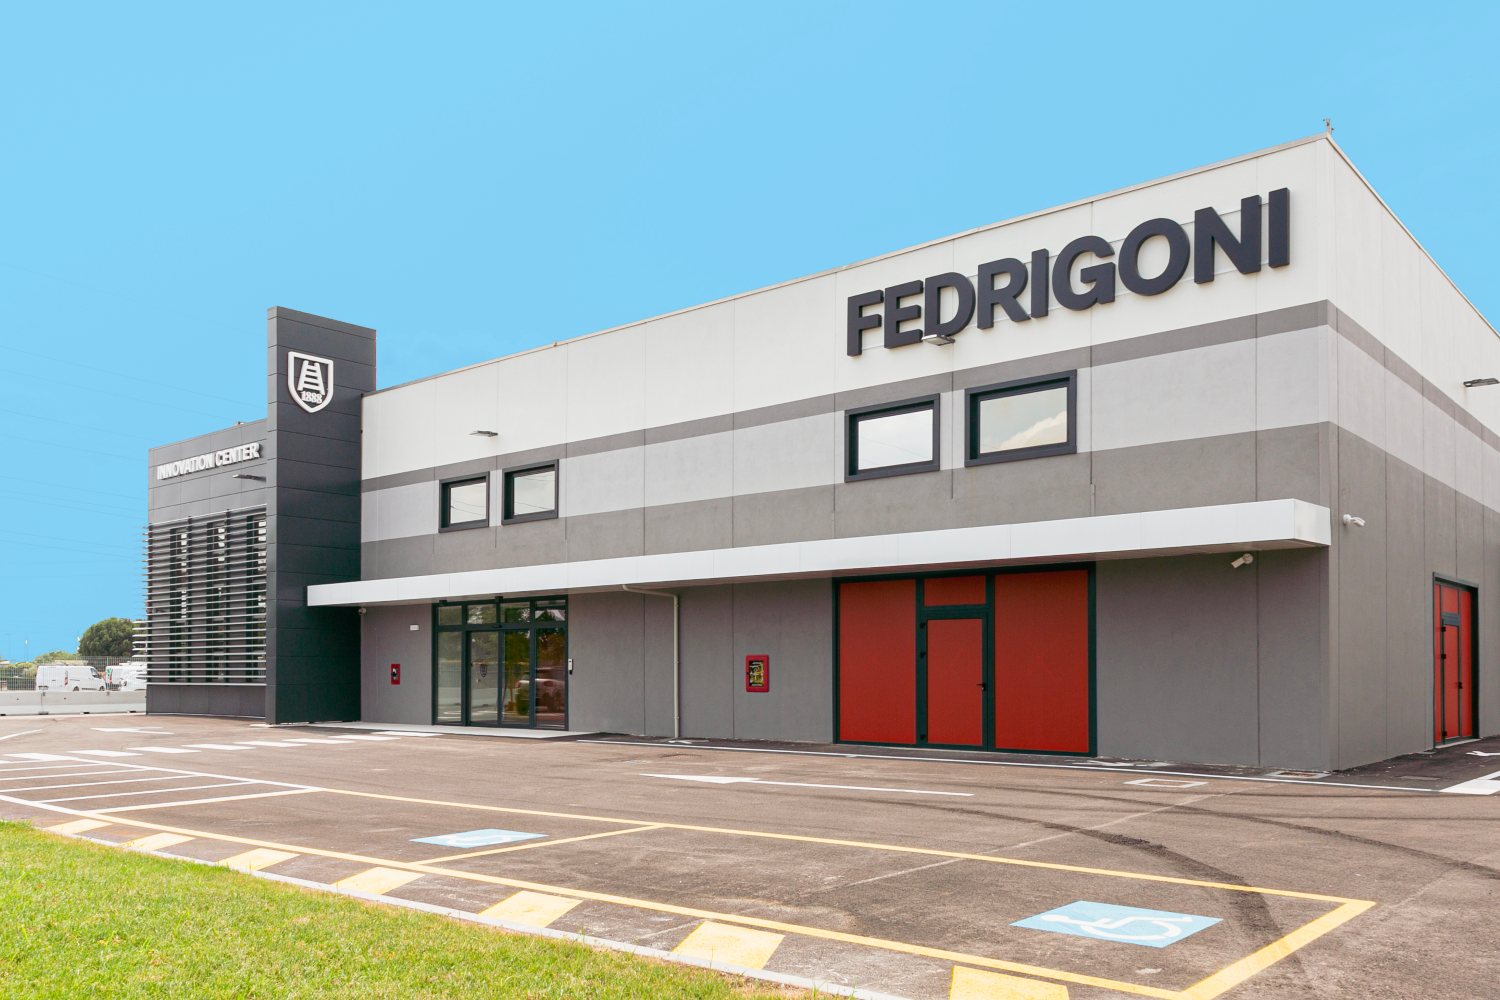 InnovationCenter Fedrigoni